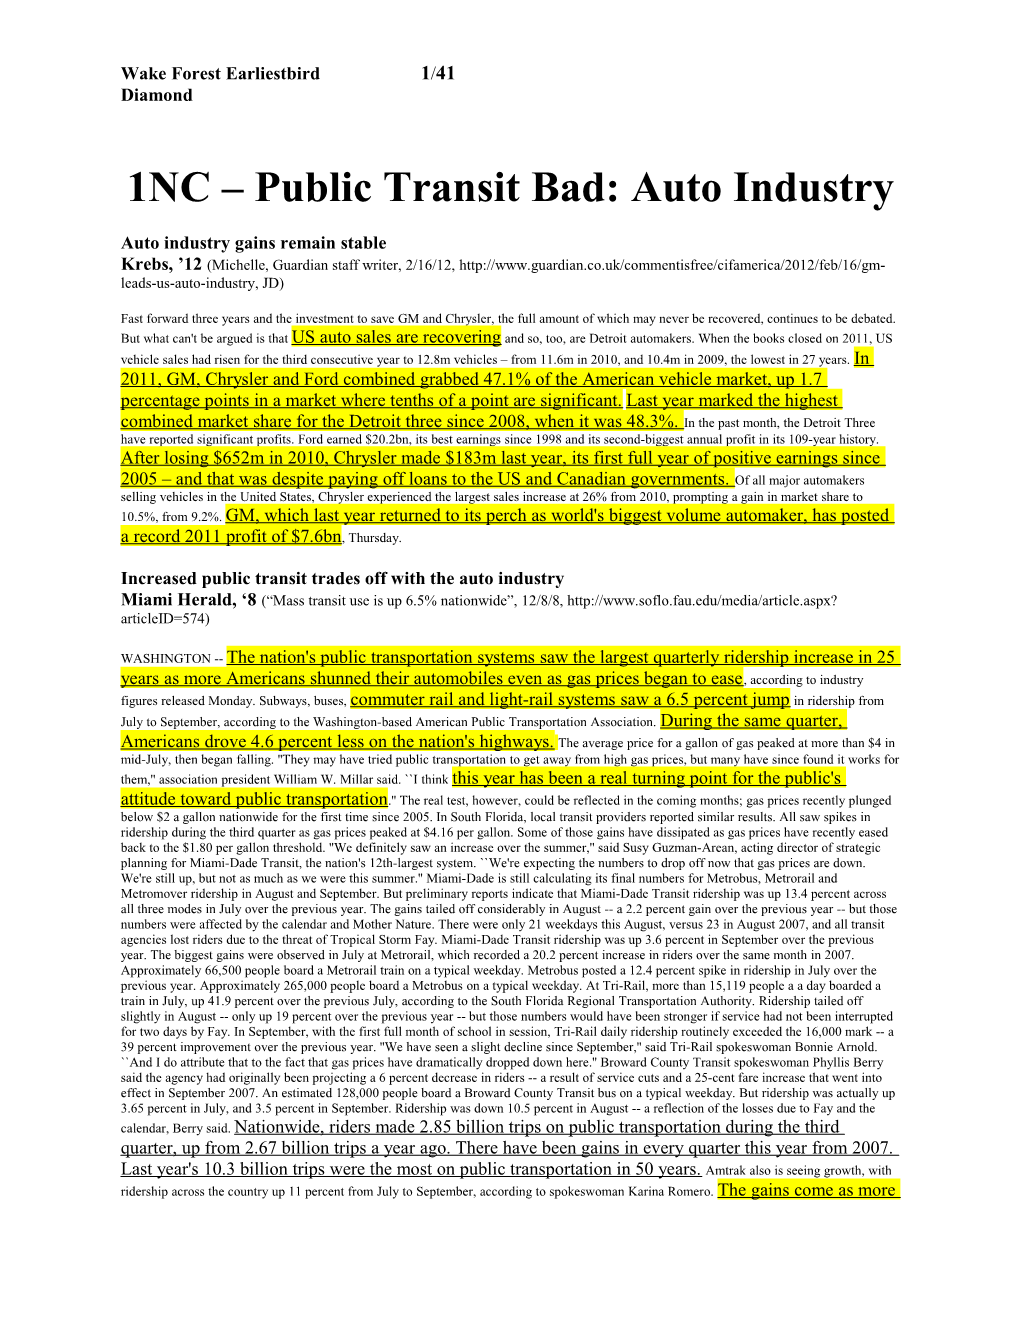 1NC Public Transit Bad: Auto Industry